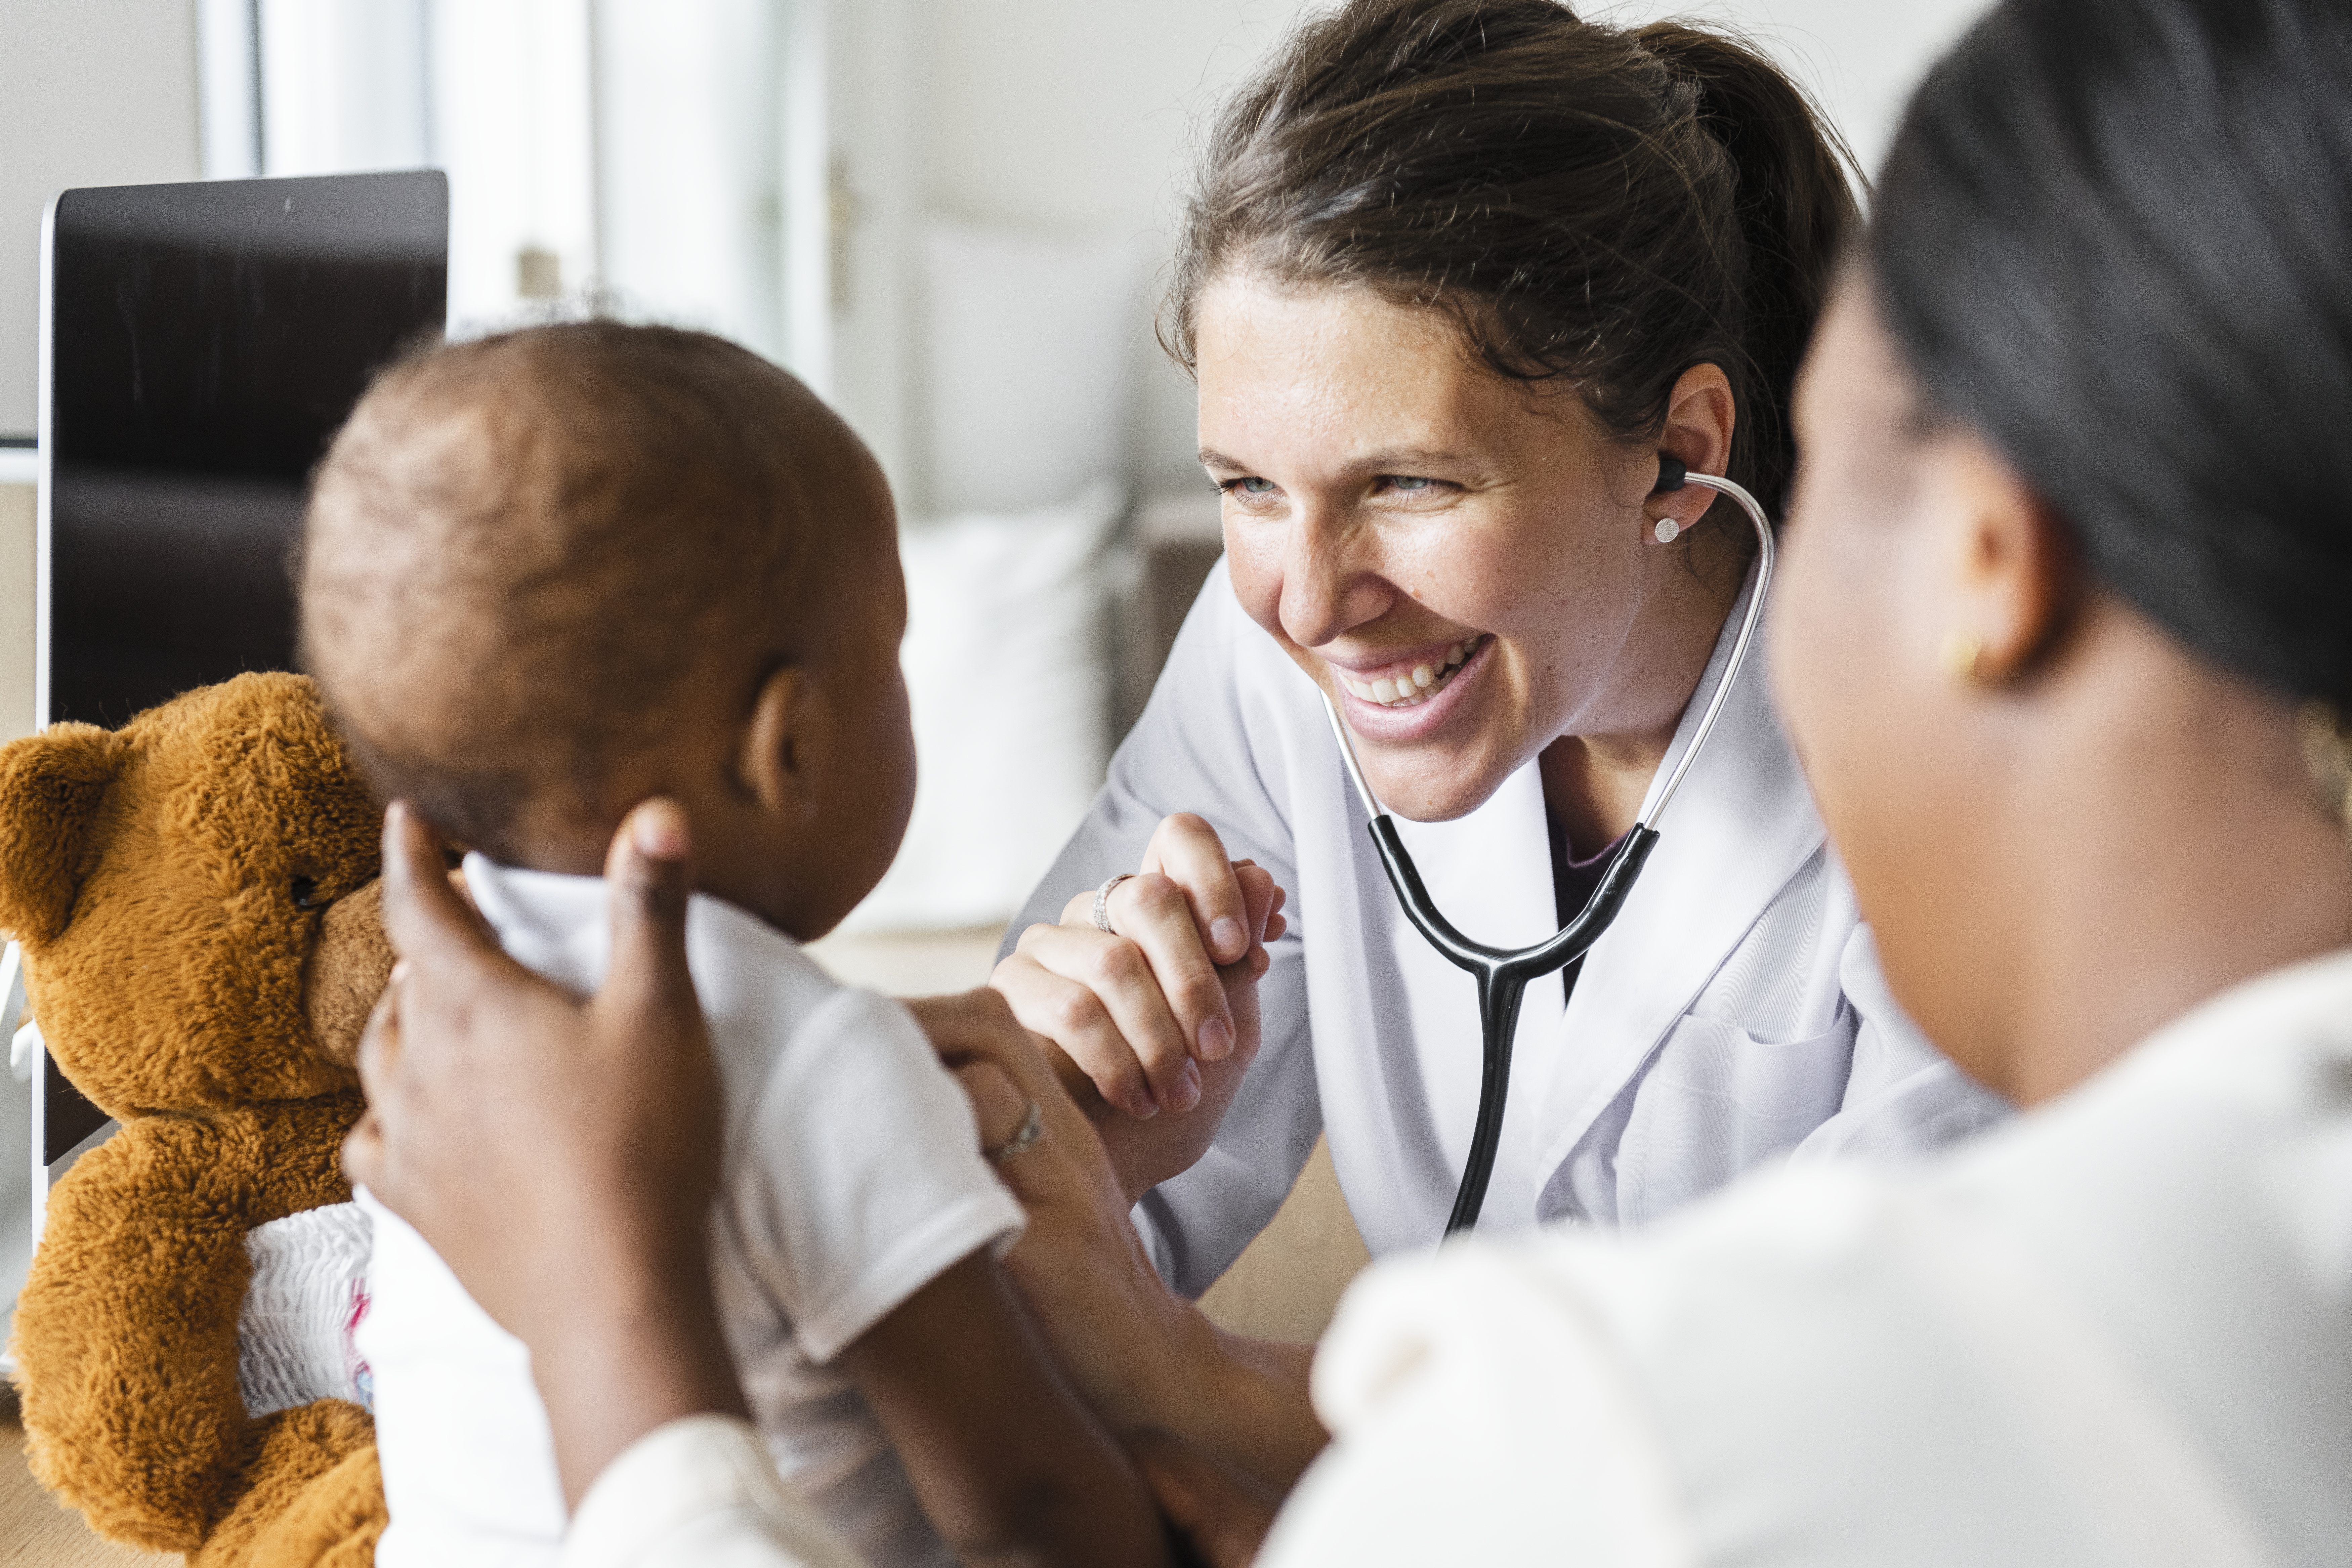 locate practicing pediatric physicians